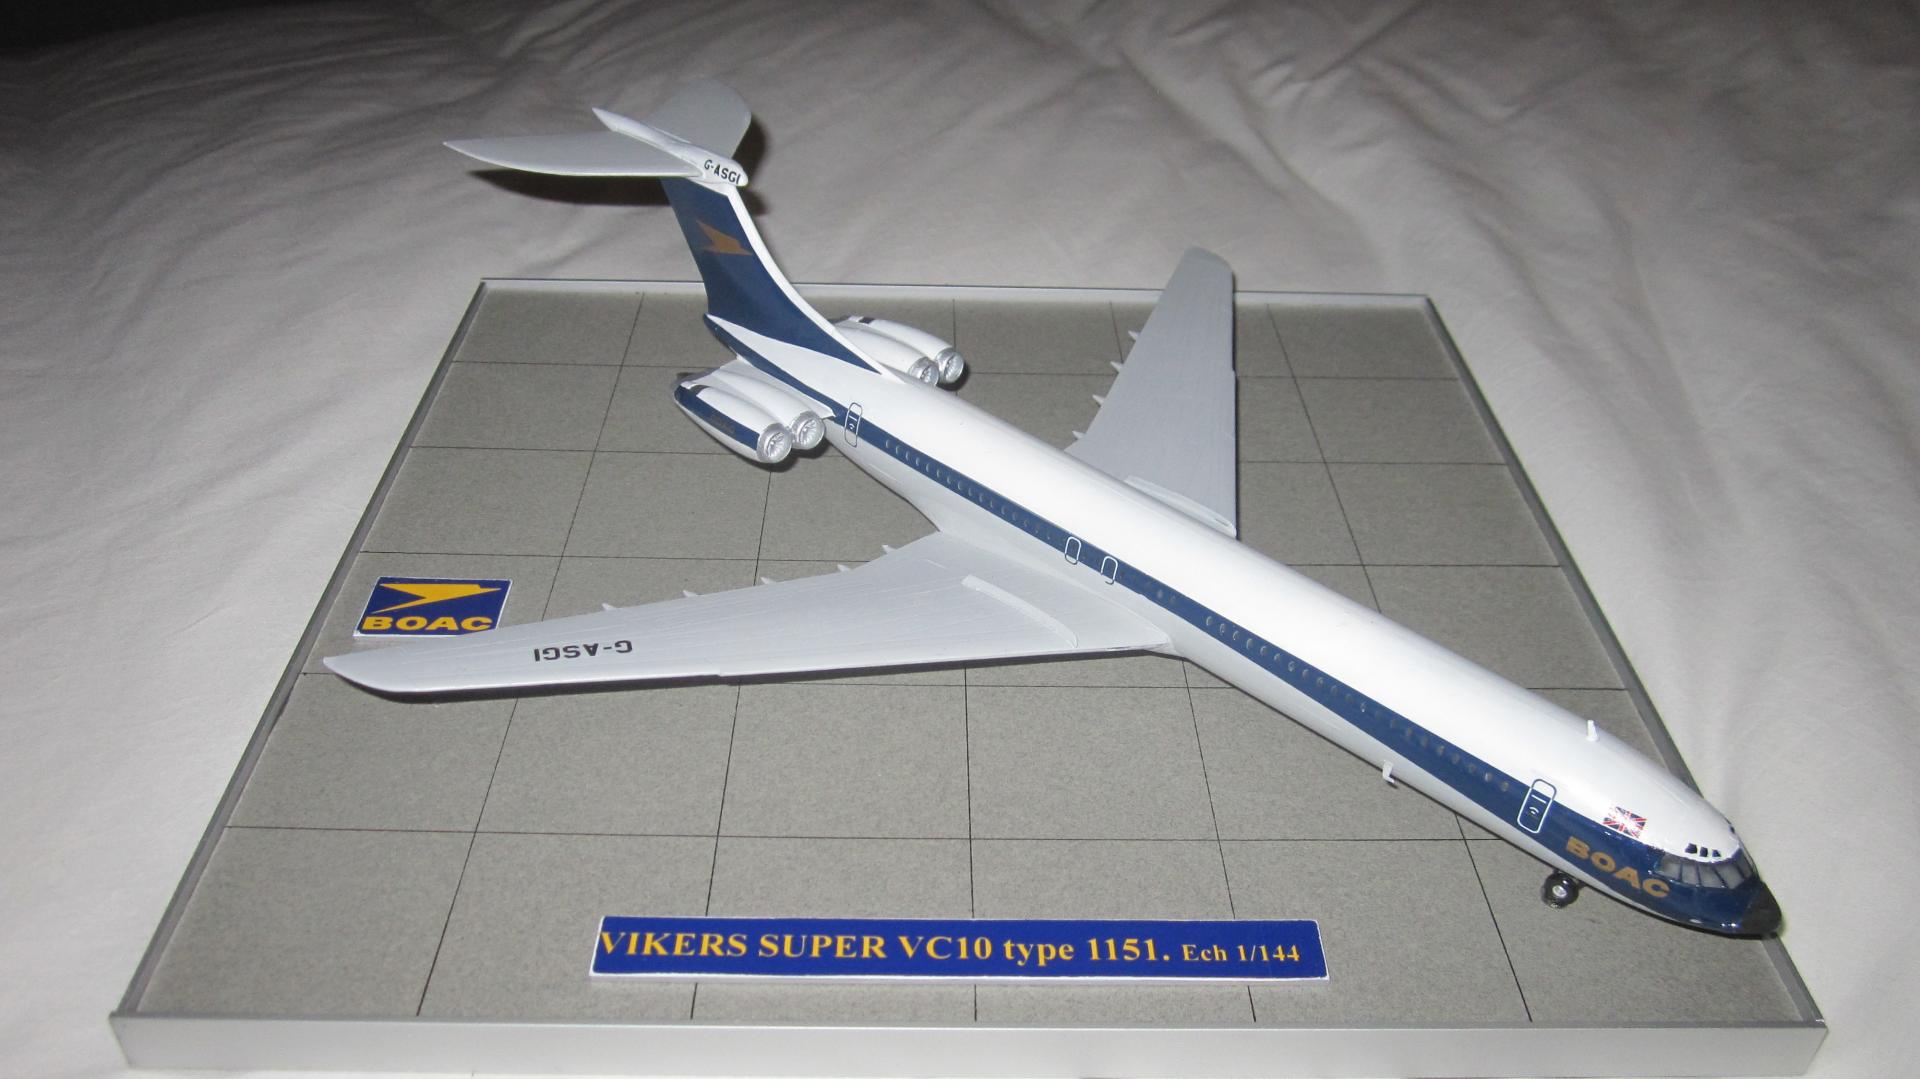 VICKERS SUPER VC10